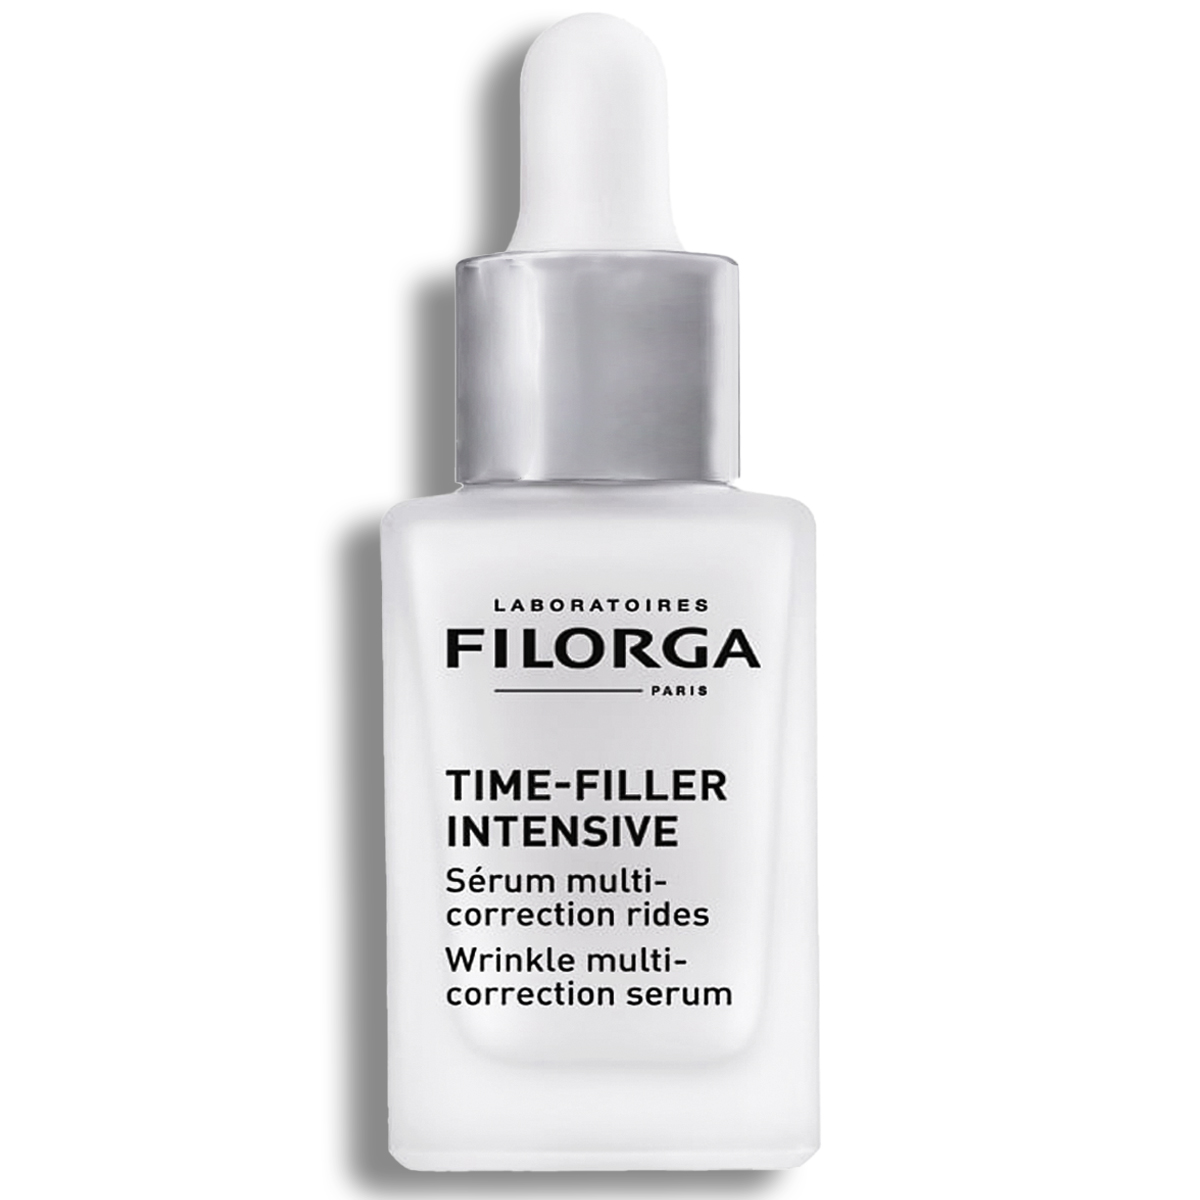 Filorga Восстанавливающая сыворотка против морщин Filler Intensive, 30 мл (Filorga, Time) filorga time filler intensive сыворотка мультикоректор морщин 30мл